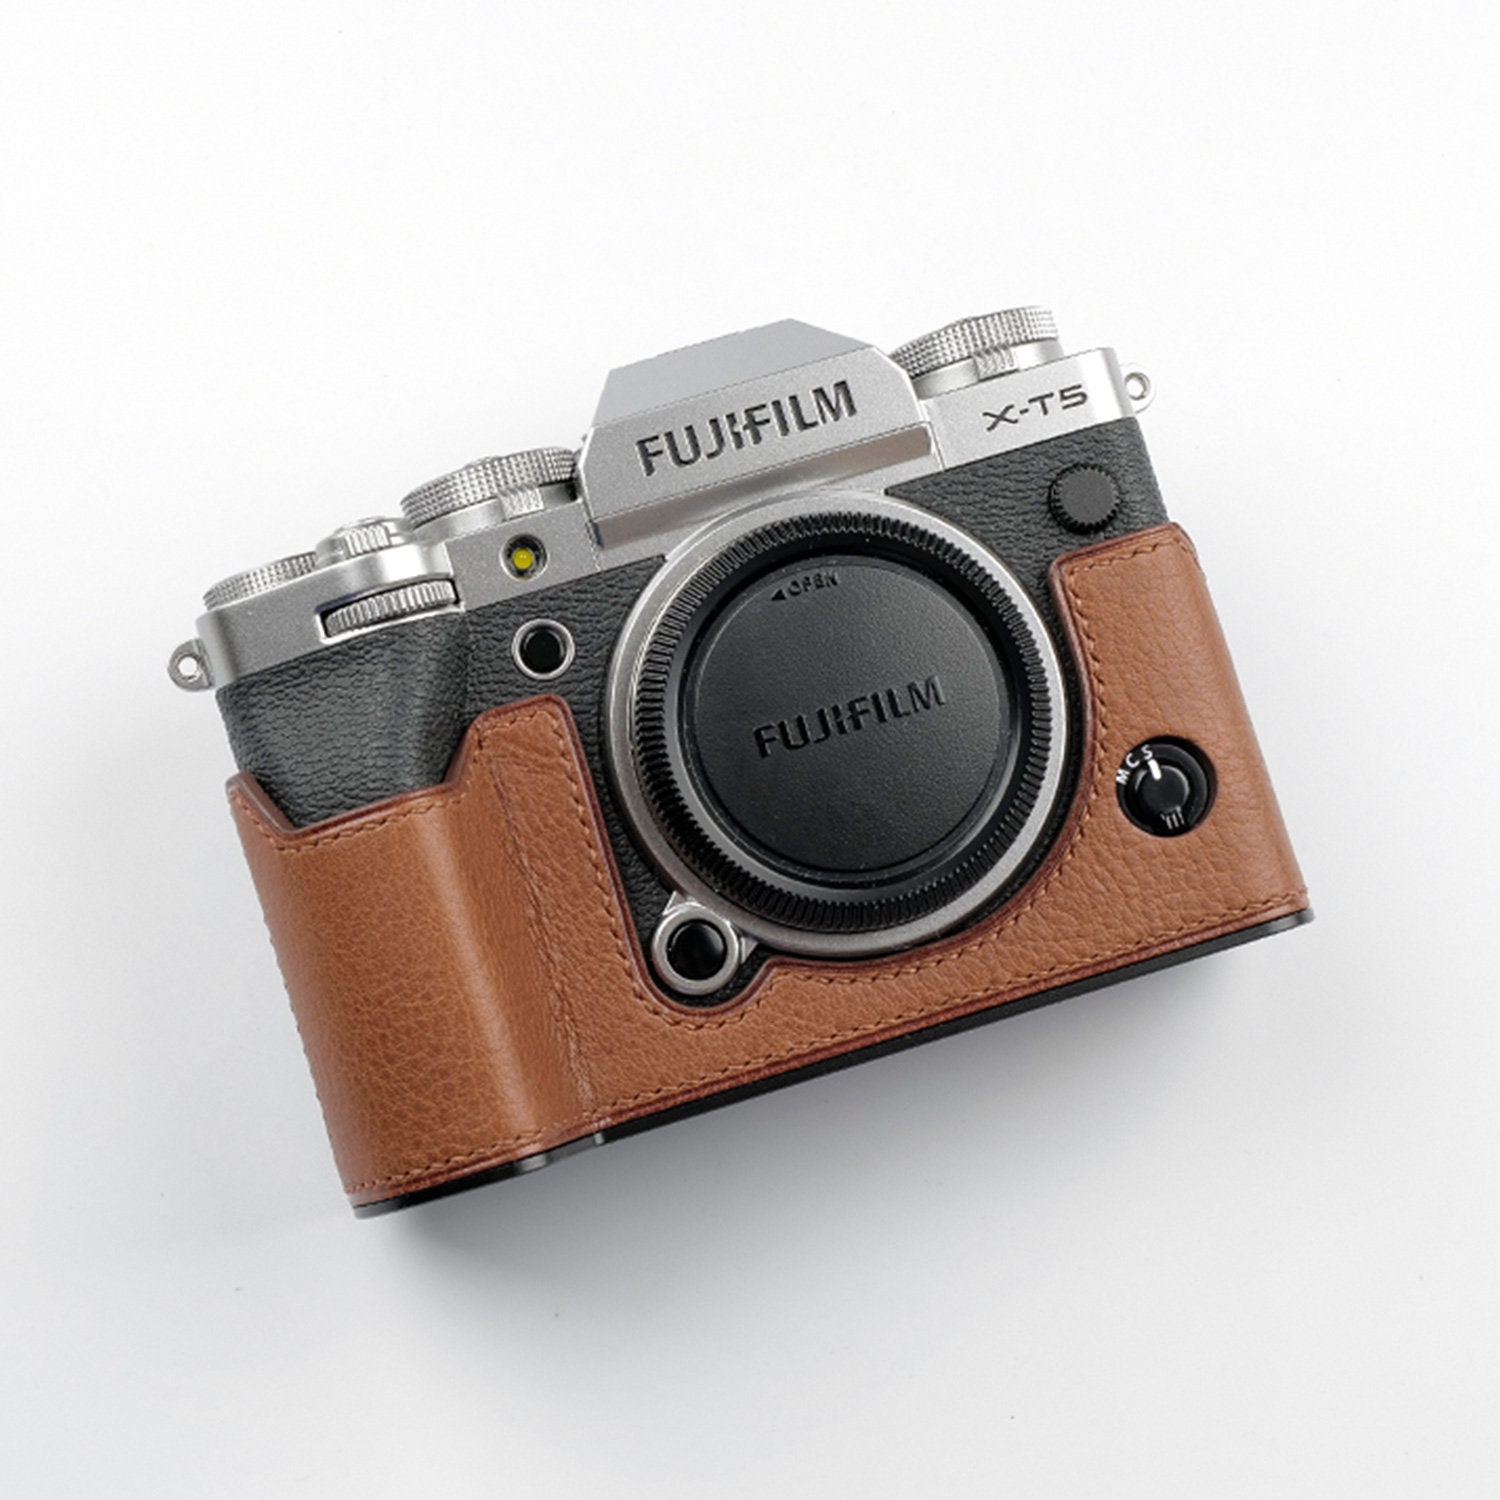 Rieibi Fuji XT5 Case - PU Leather Half Case for Fujifilm X-T5 Digital  Camera - Body Protective Grip Case for Fuji XT5 X-T5, Coffee, Beauty Case